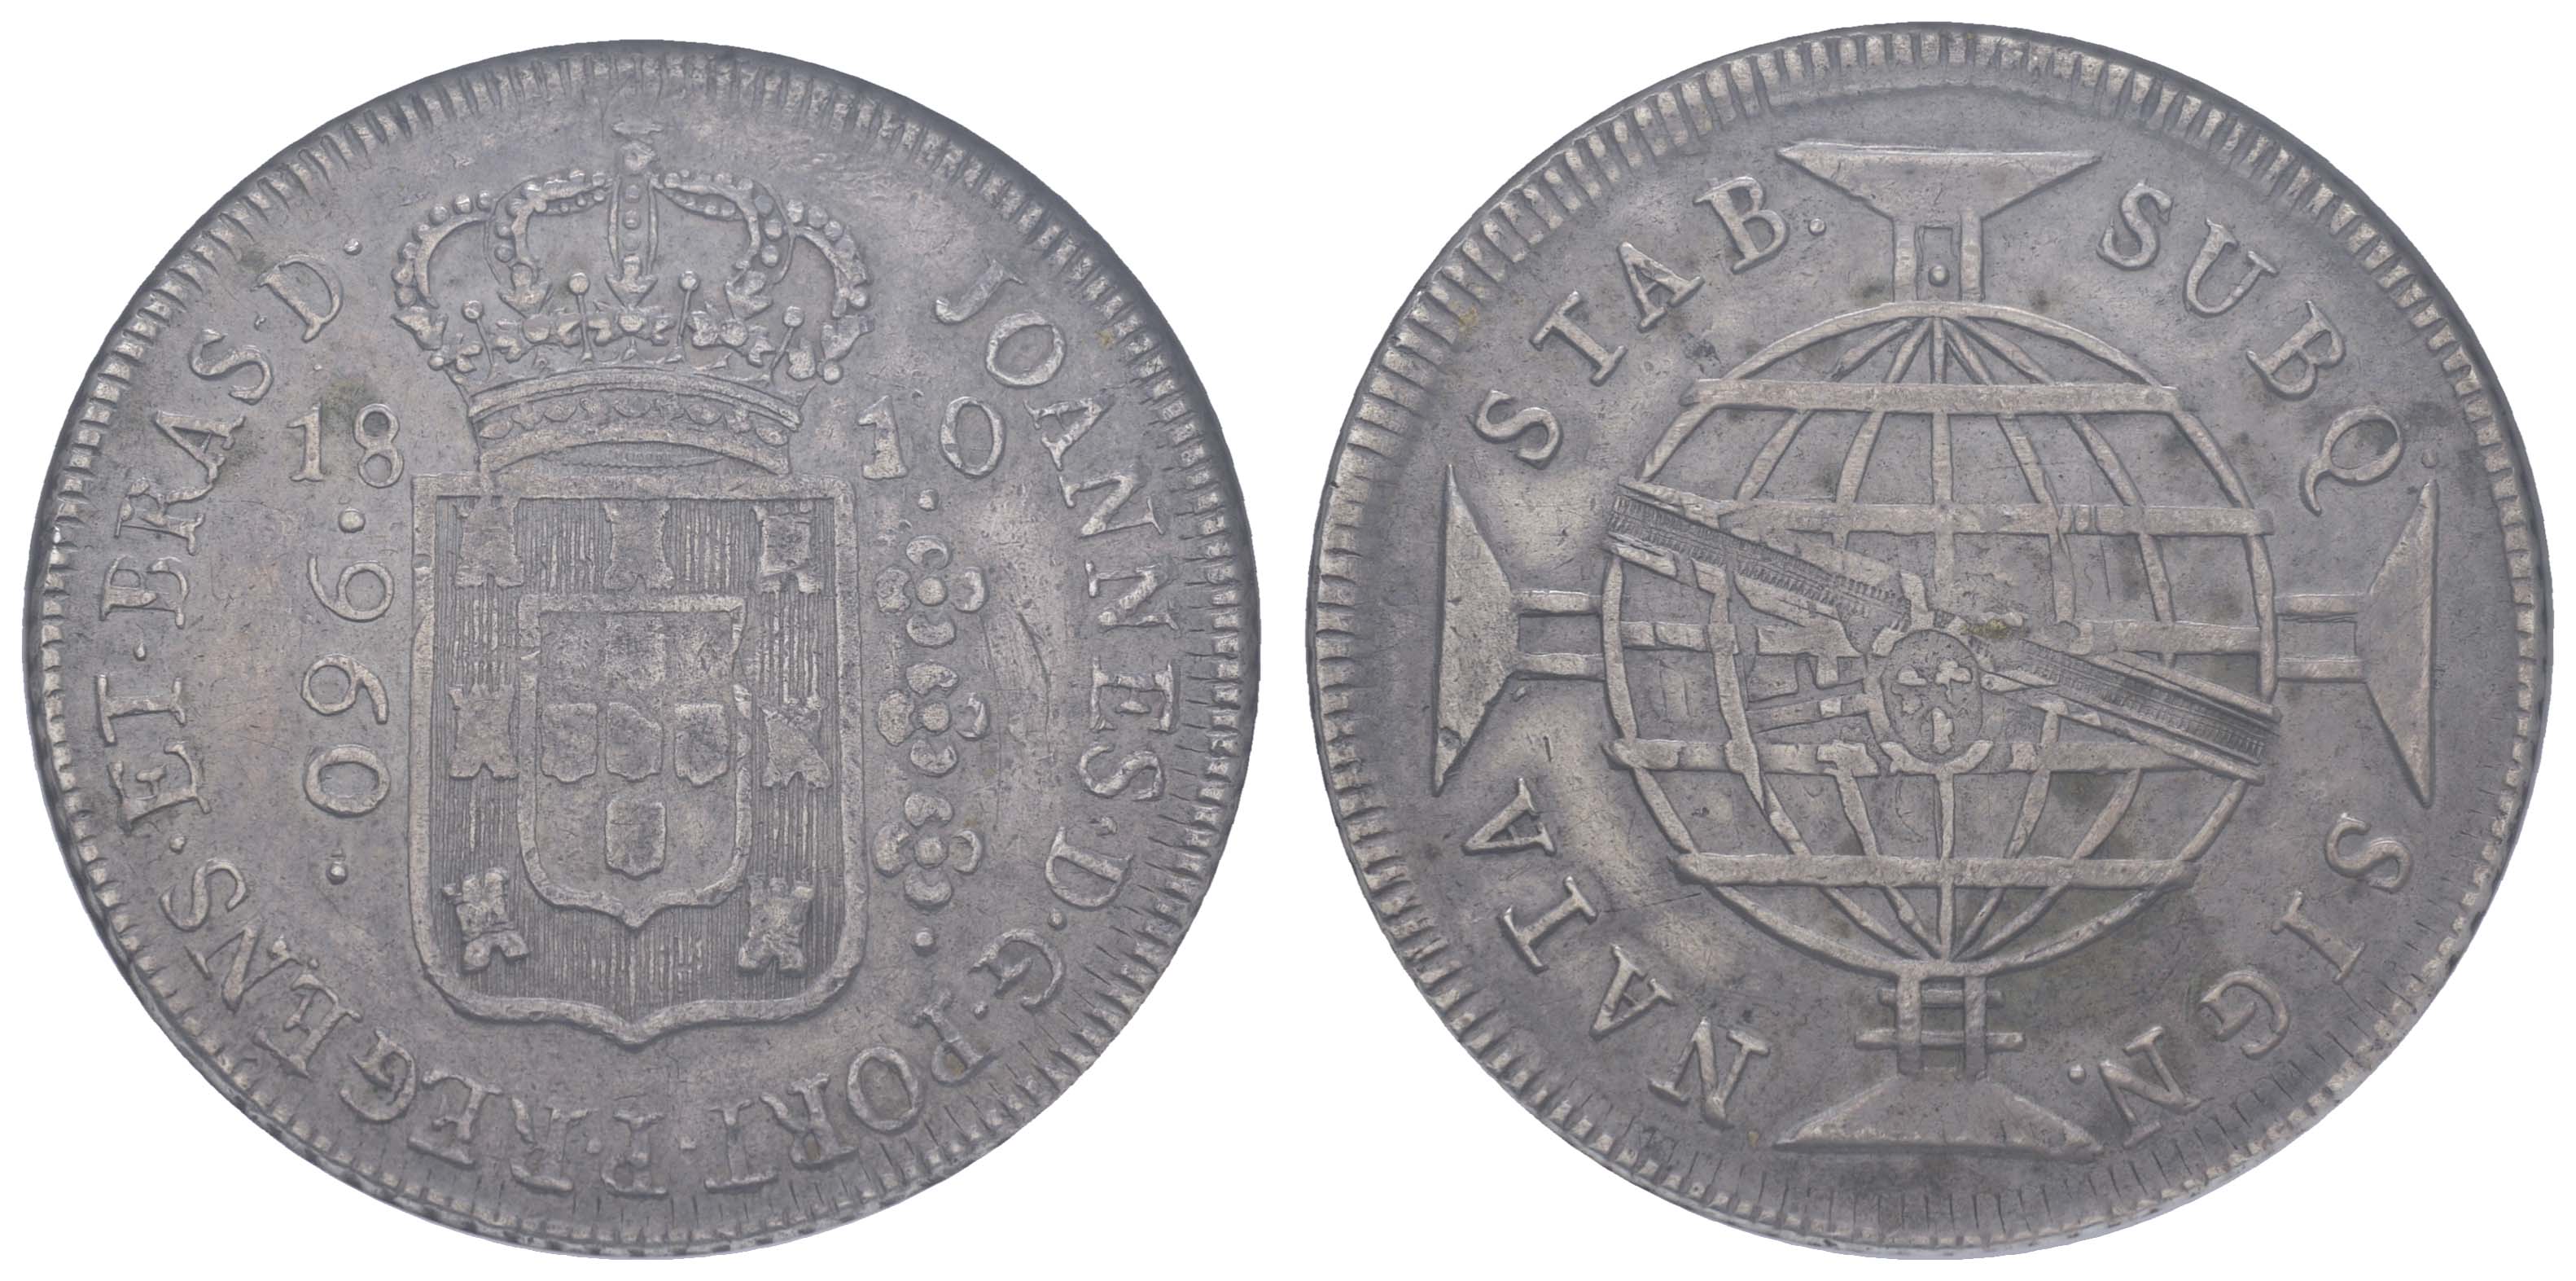 Lot 1883 - übersee brasilien -  Auktionshaus Ulrich Felzmann GmbH & Co. KG Coins single lots